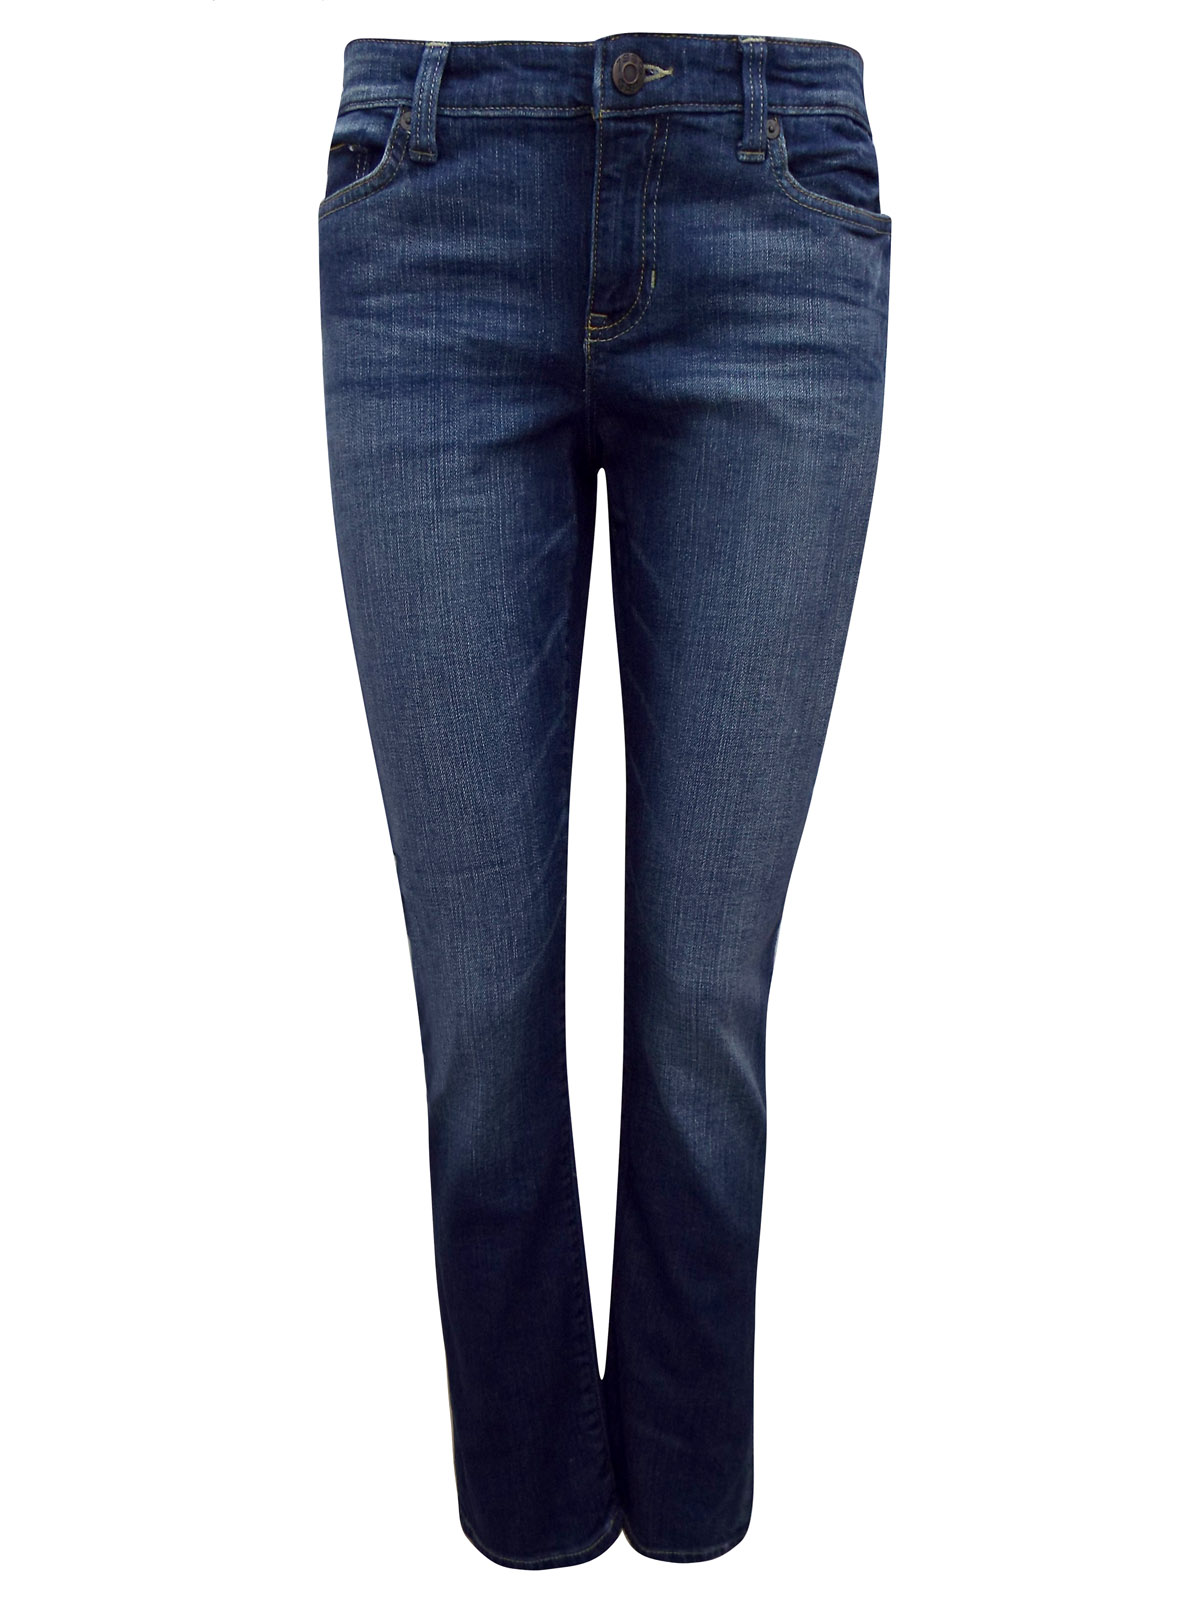 GAP BLUE Skinny Fit Denim Jeans - Size 6 to 12